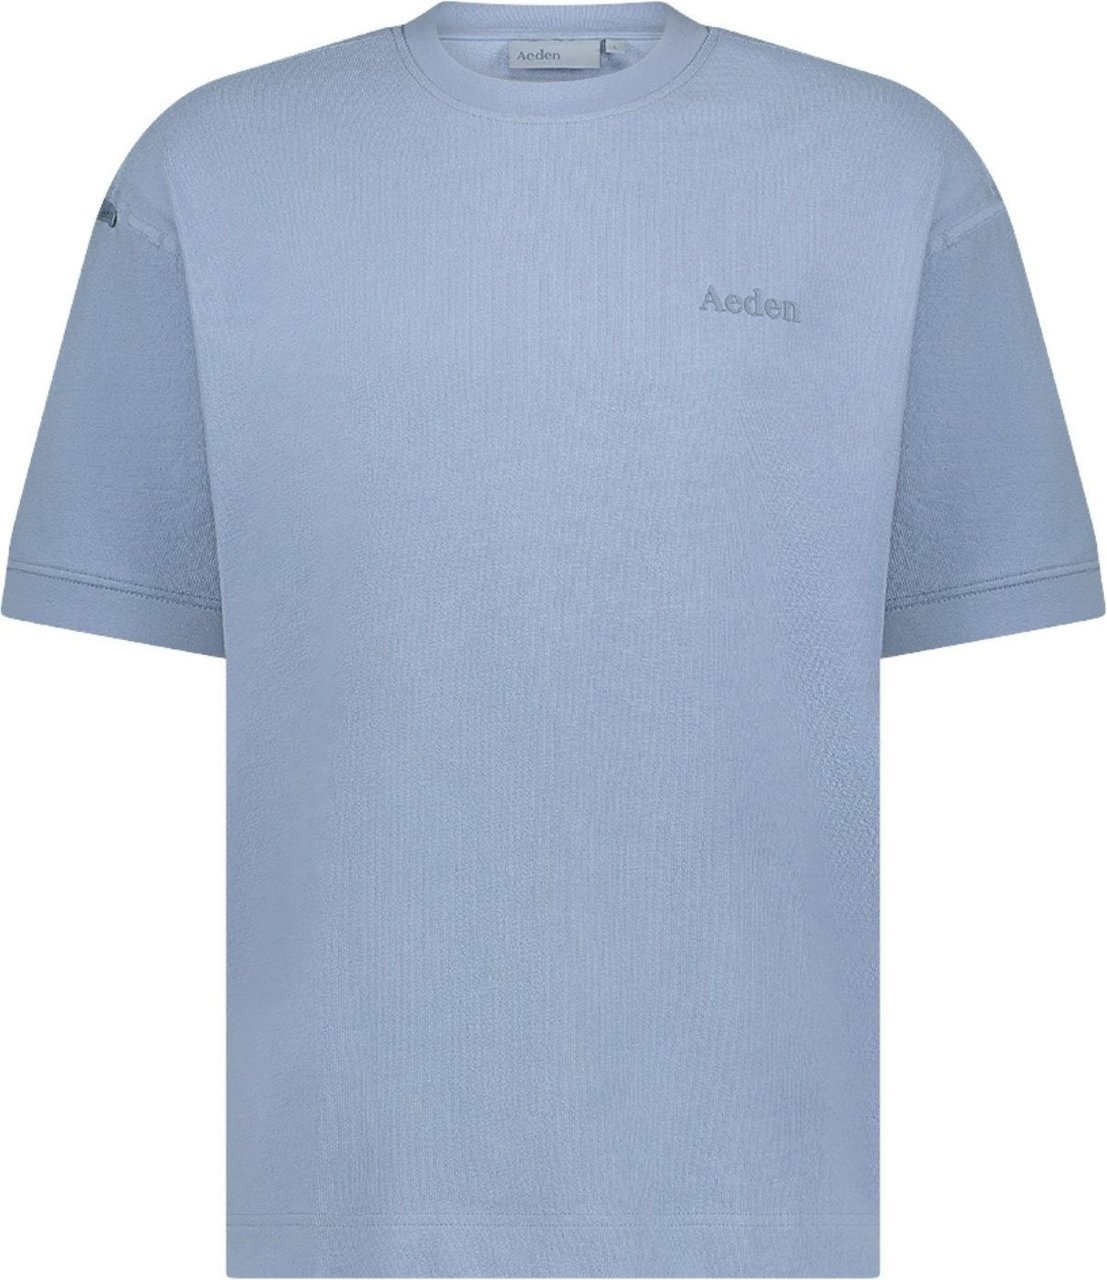 Aeden Aeden Heren T-shirt Blauw A22242819/411 Jordan Blauw